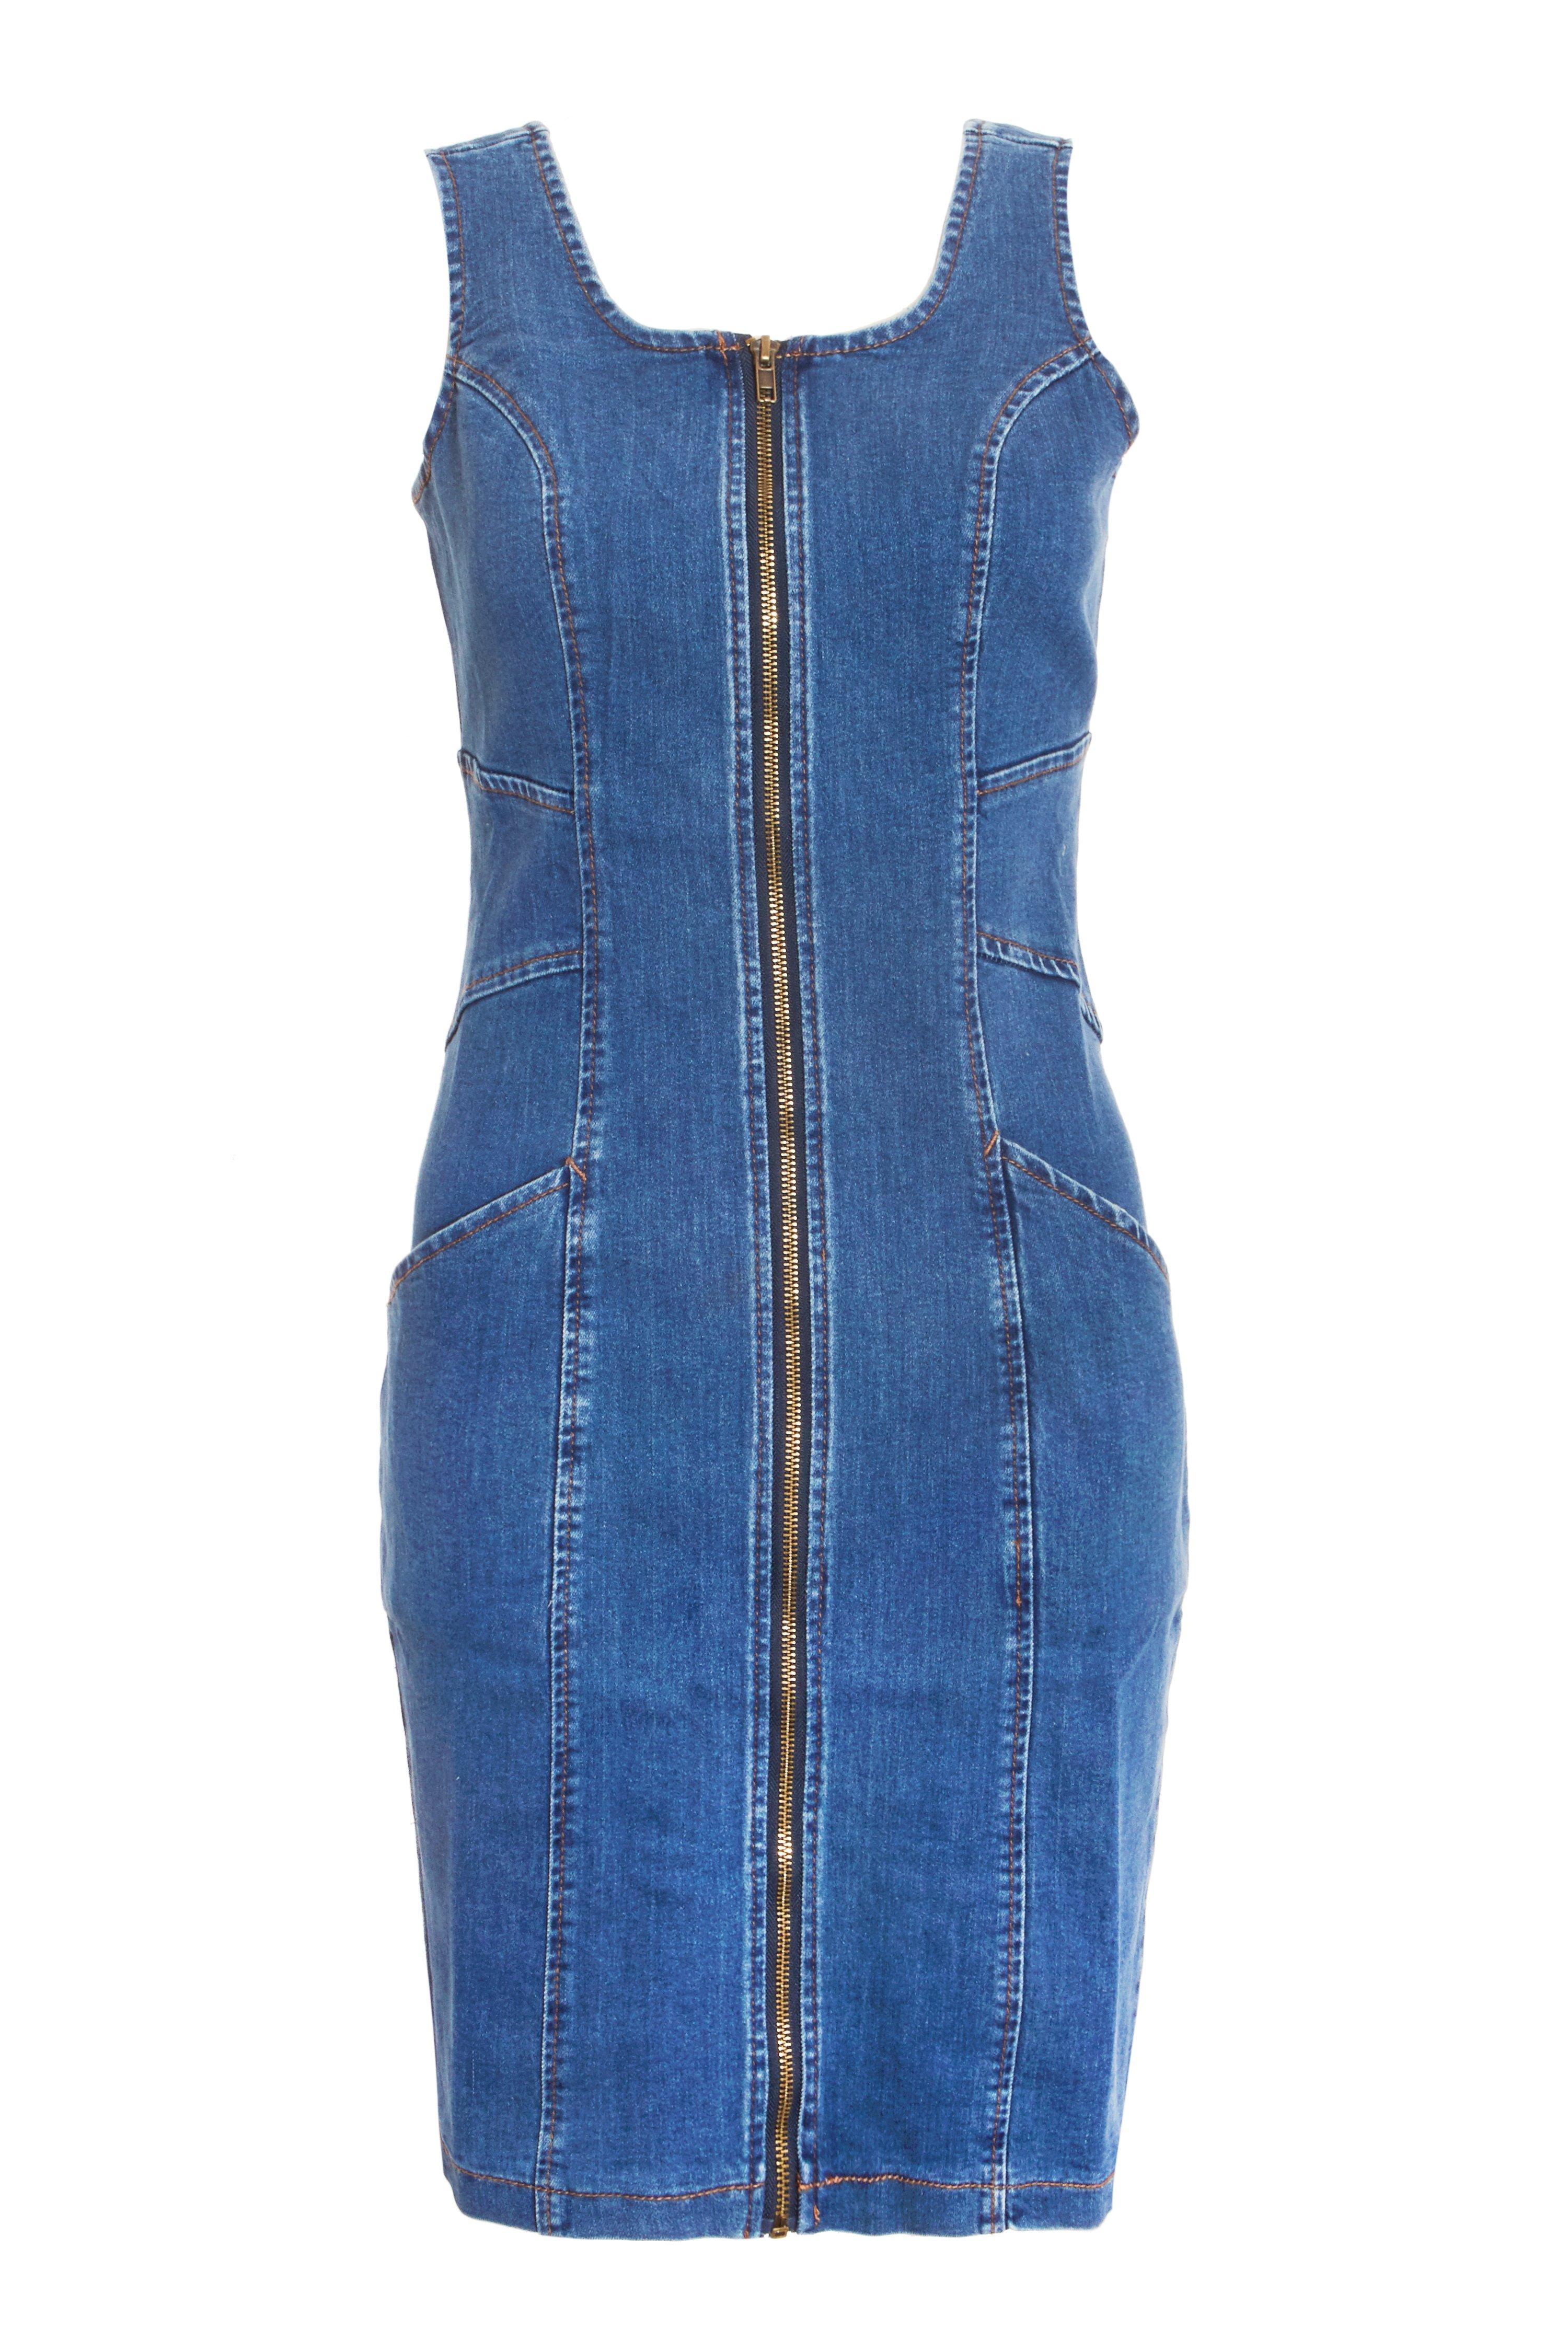 Blue Denim Zip Front Bodycon Dress - Quiz Clothing